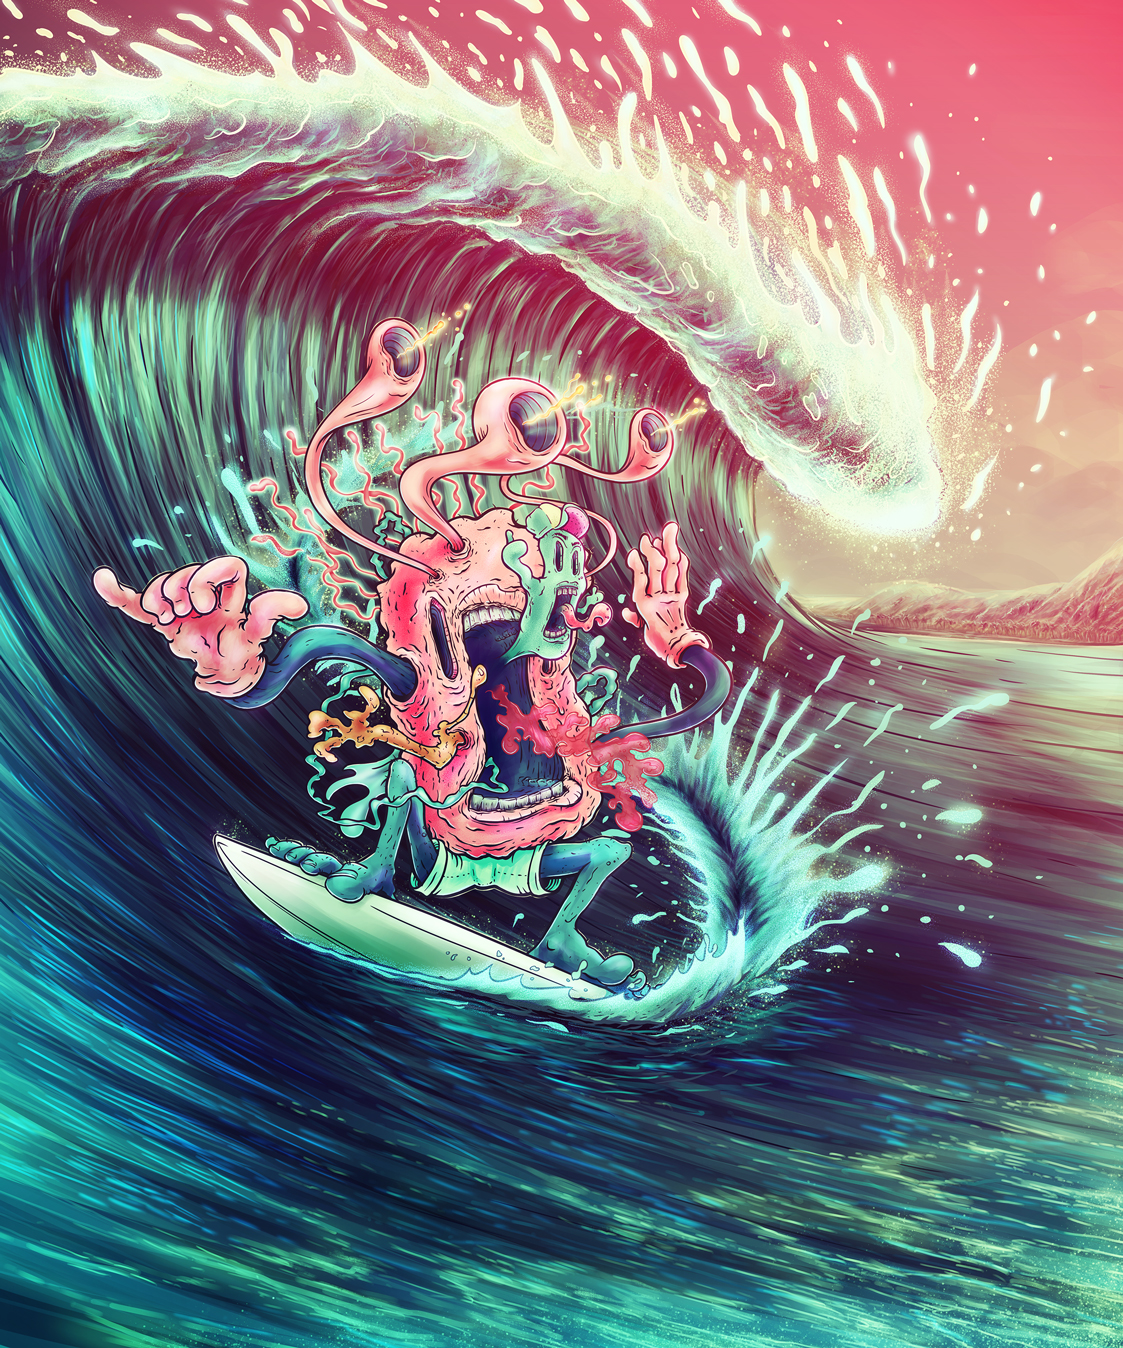 Kooks Surfing Magazine No. 1 Surf Art Cover Illustration